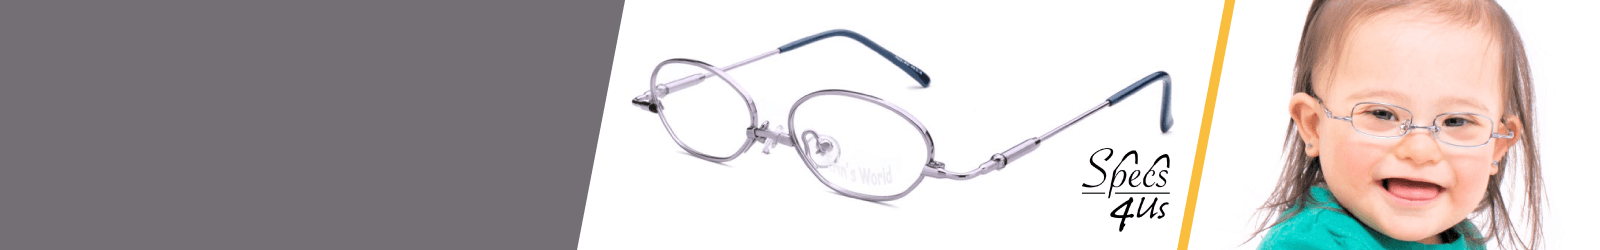 Specs4us Eyeglasses Accessories for Kids